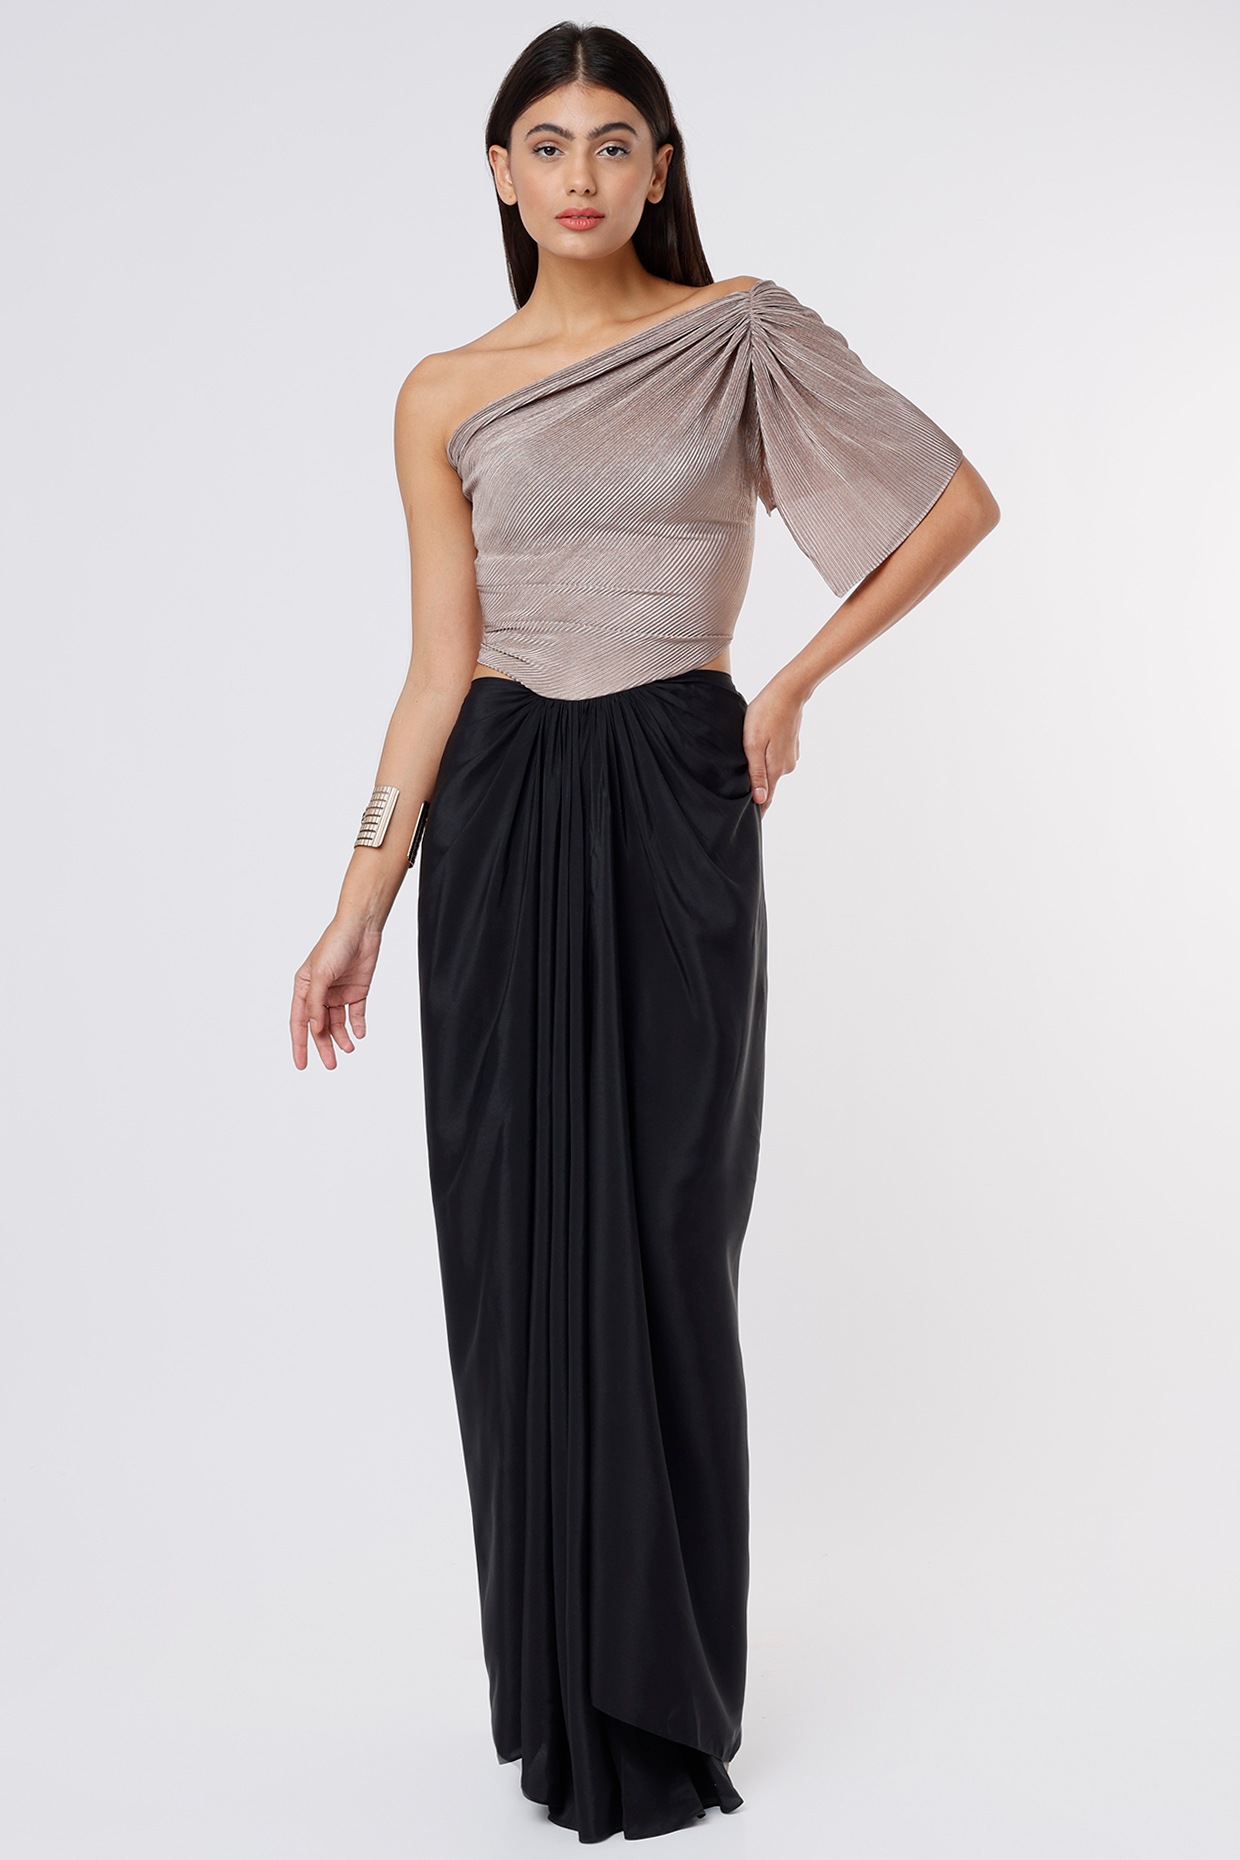 Shop Online Latest Designer Purple/Black Crepe Flared Gown – Lady India